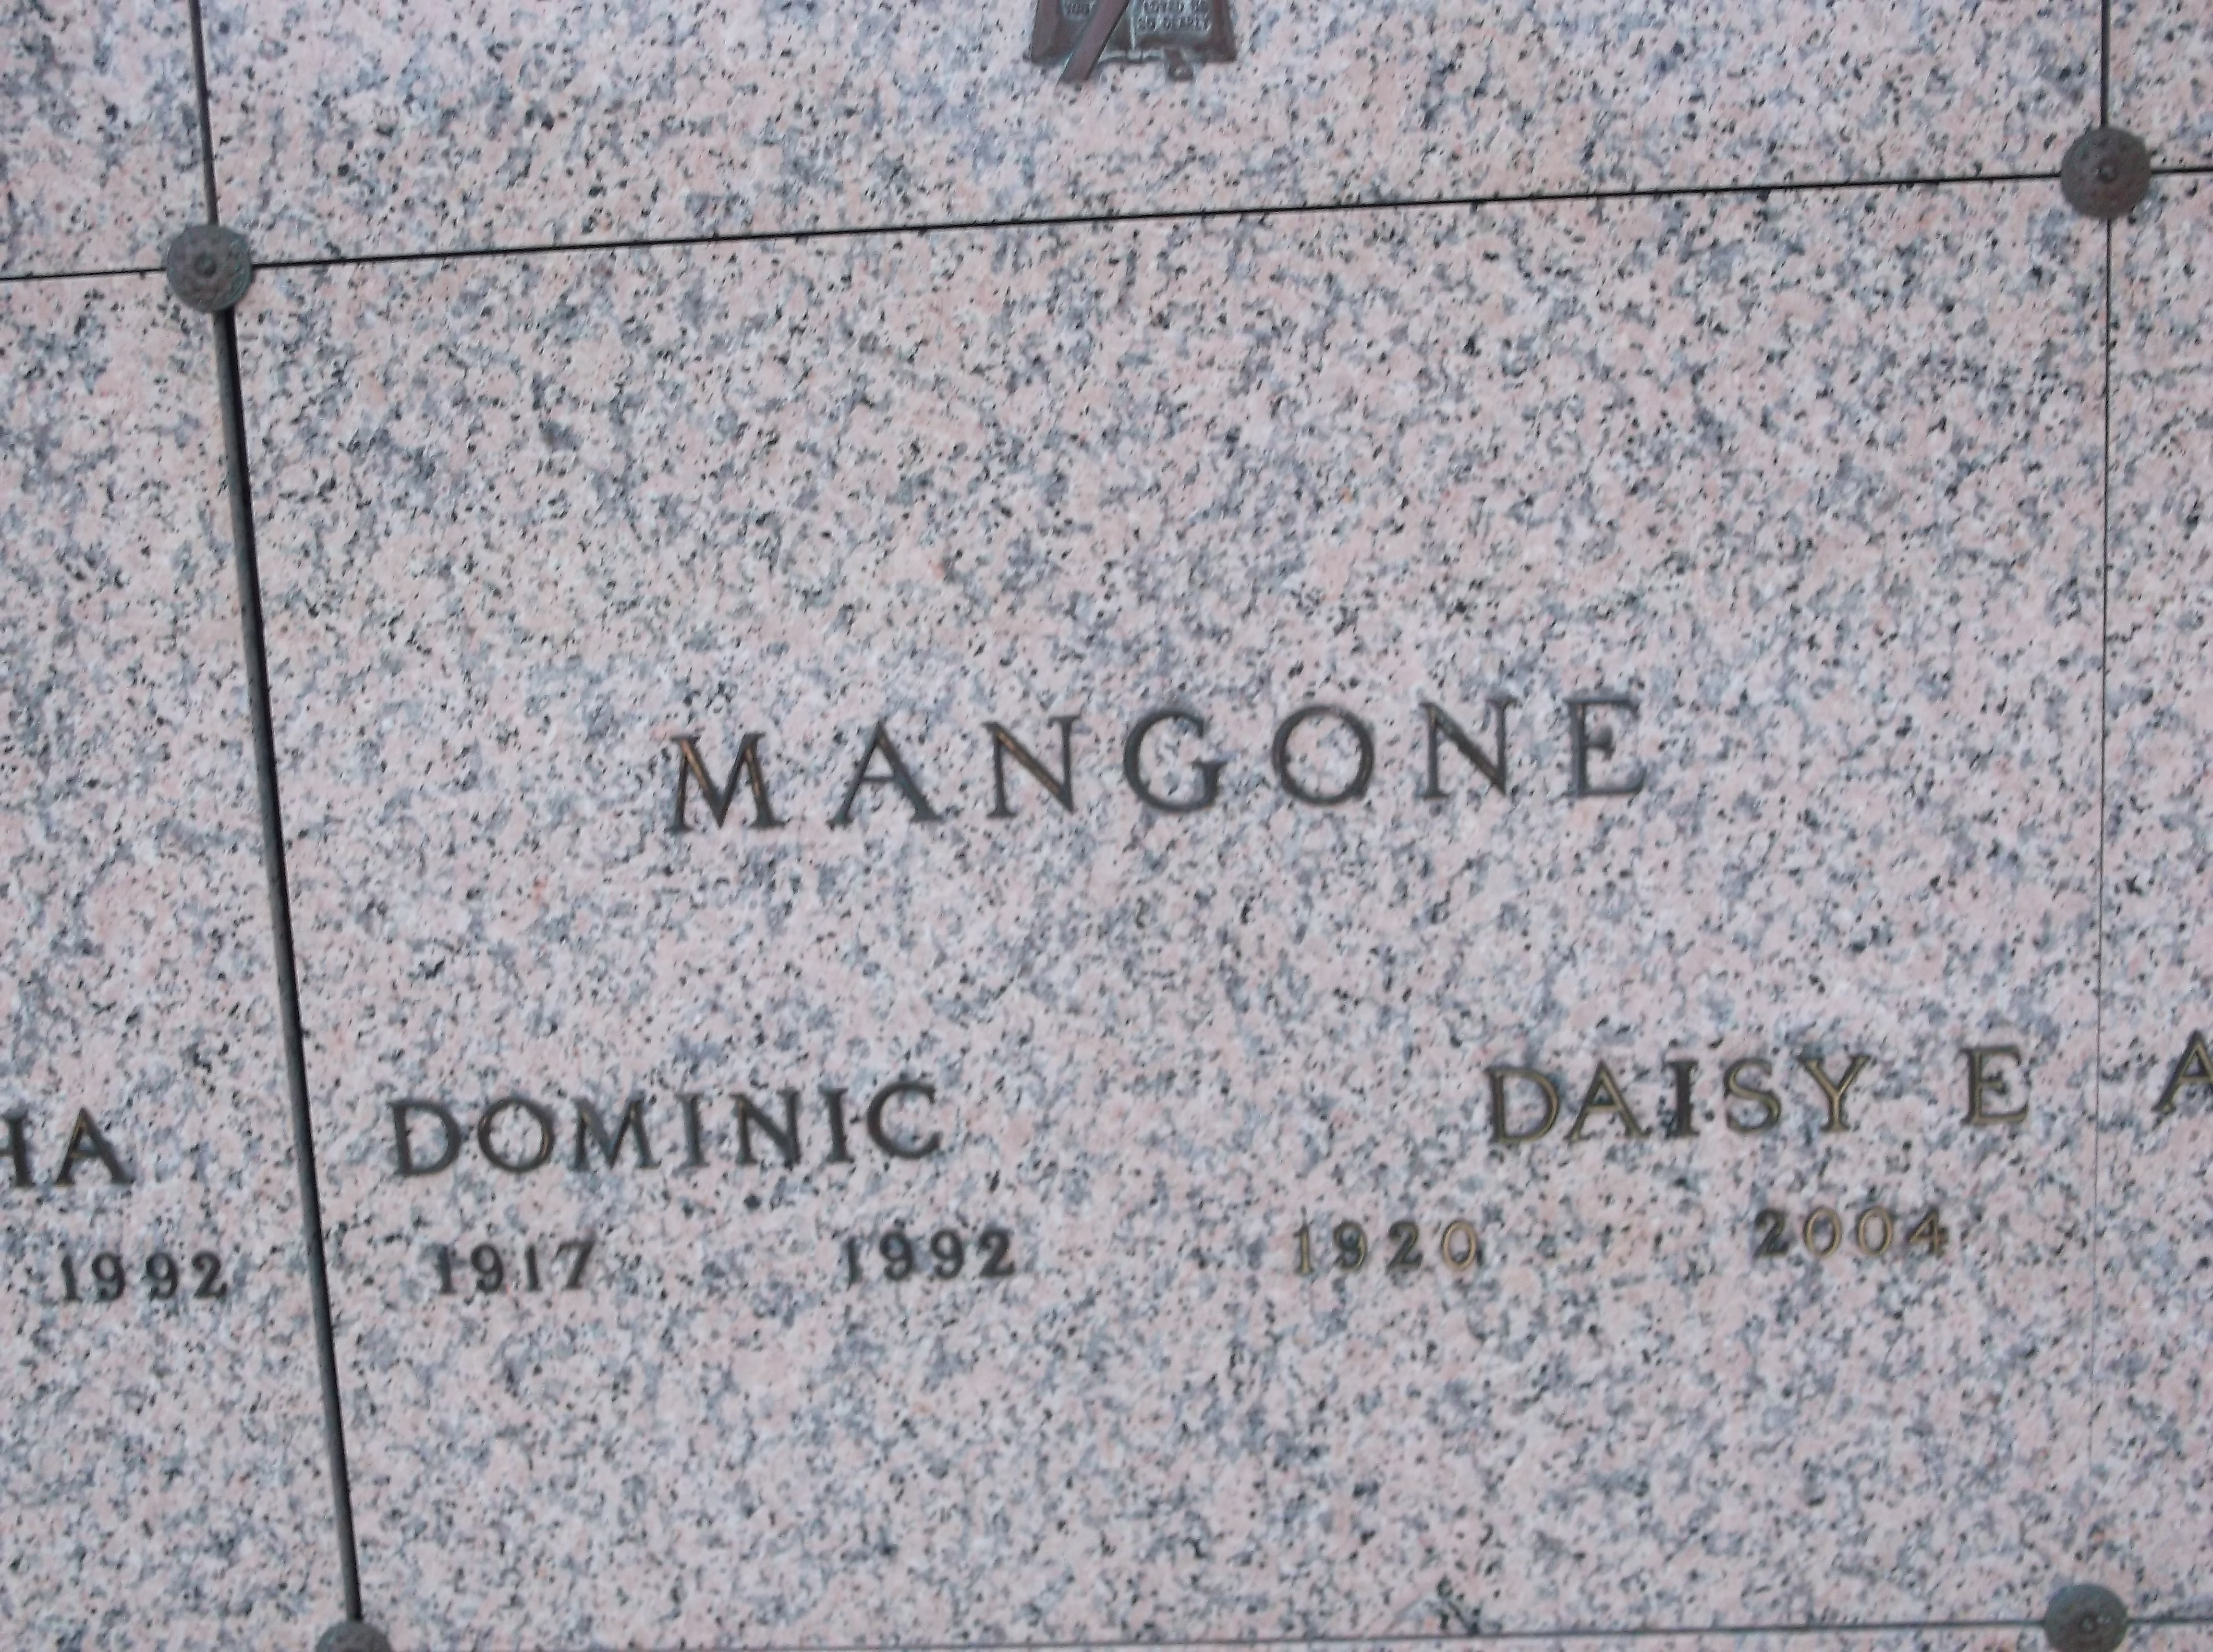 Dominic Mangone